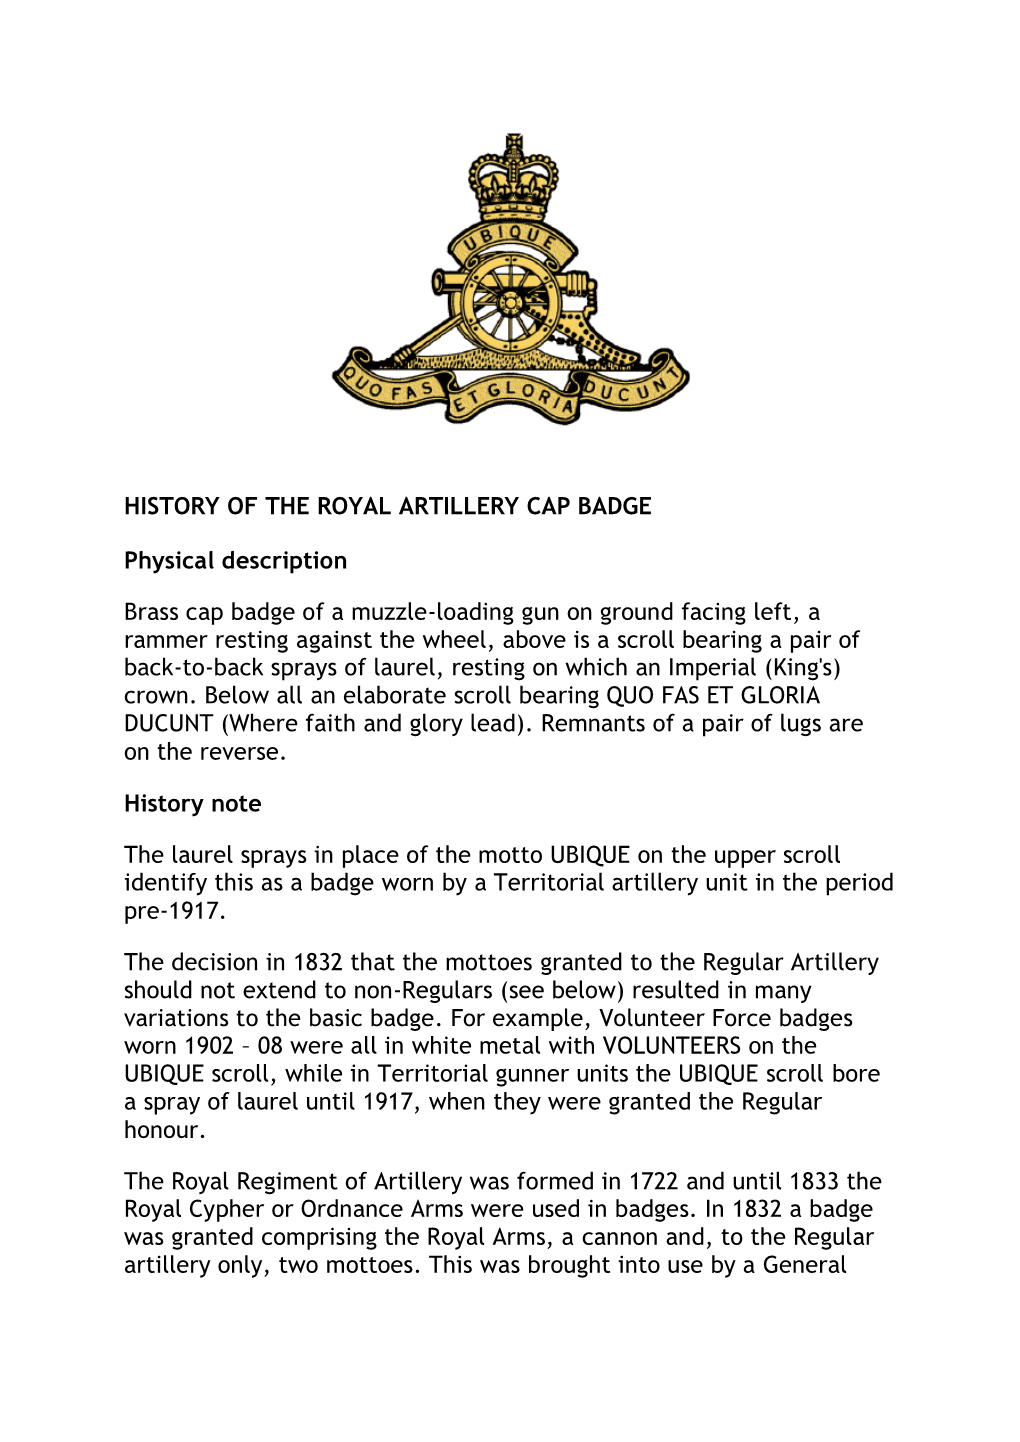 History of the Royal Artillery Cap Badge